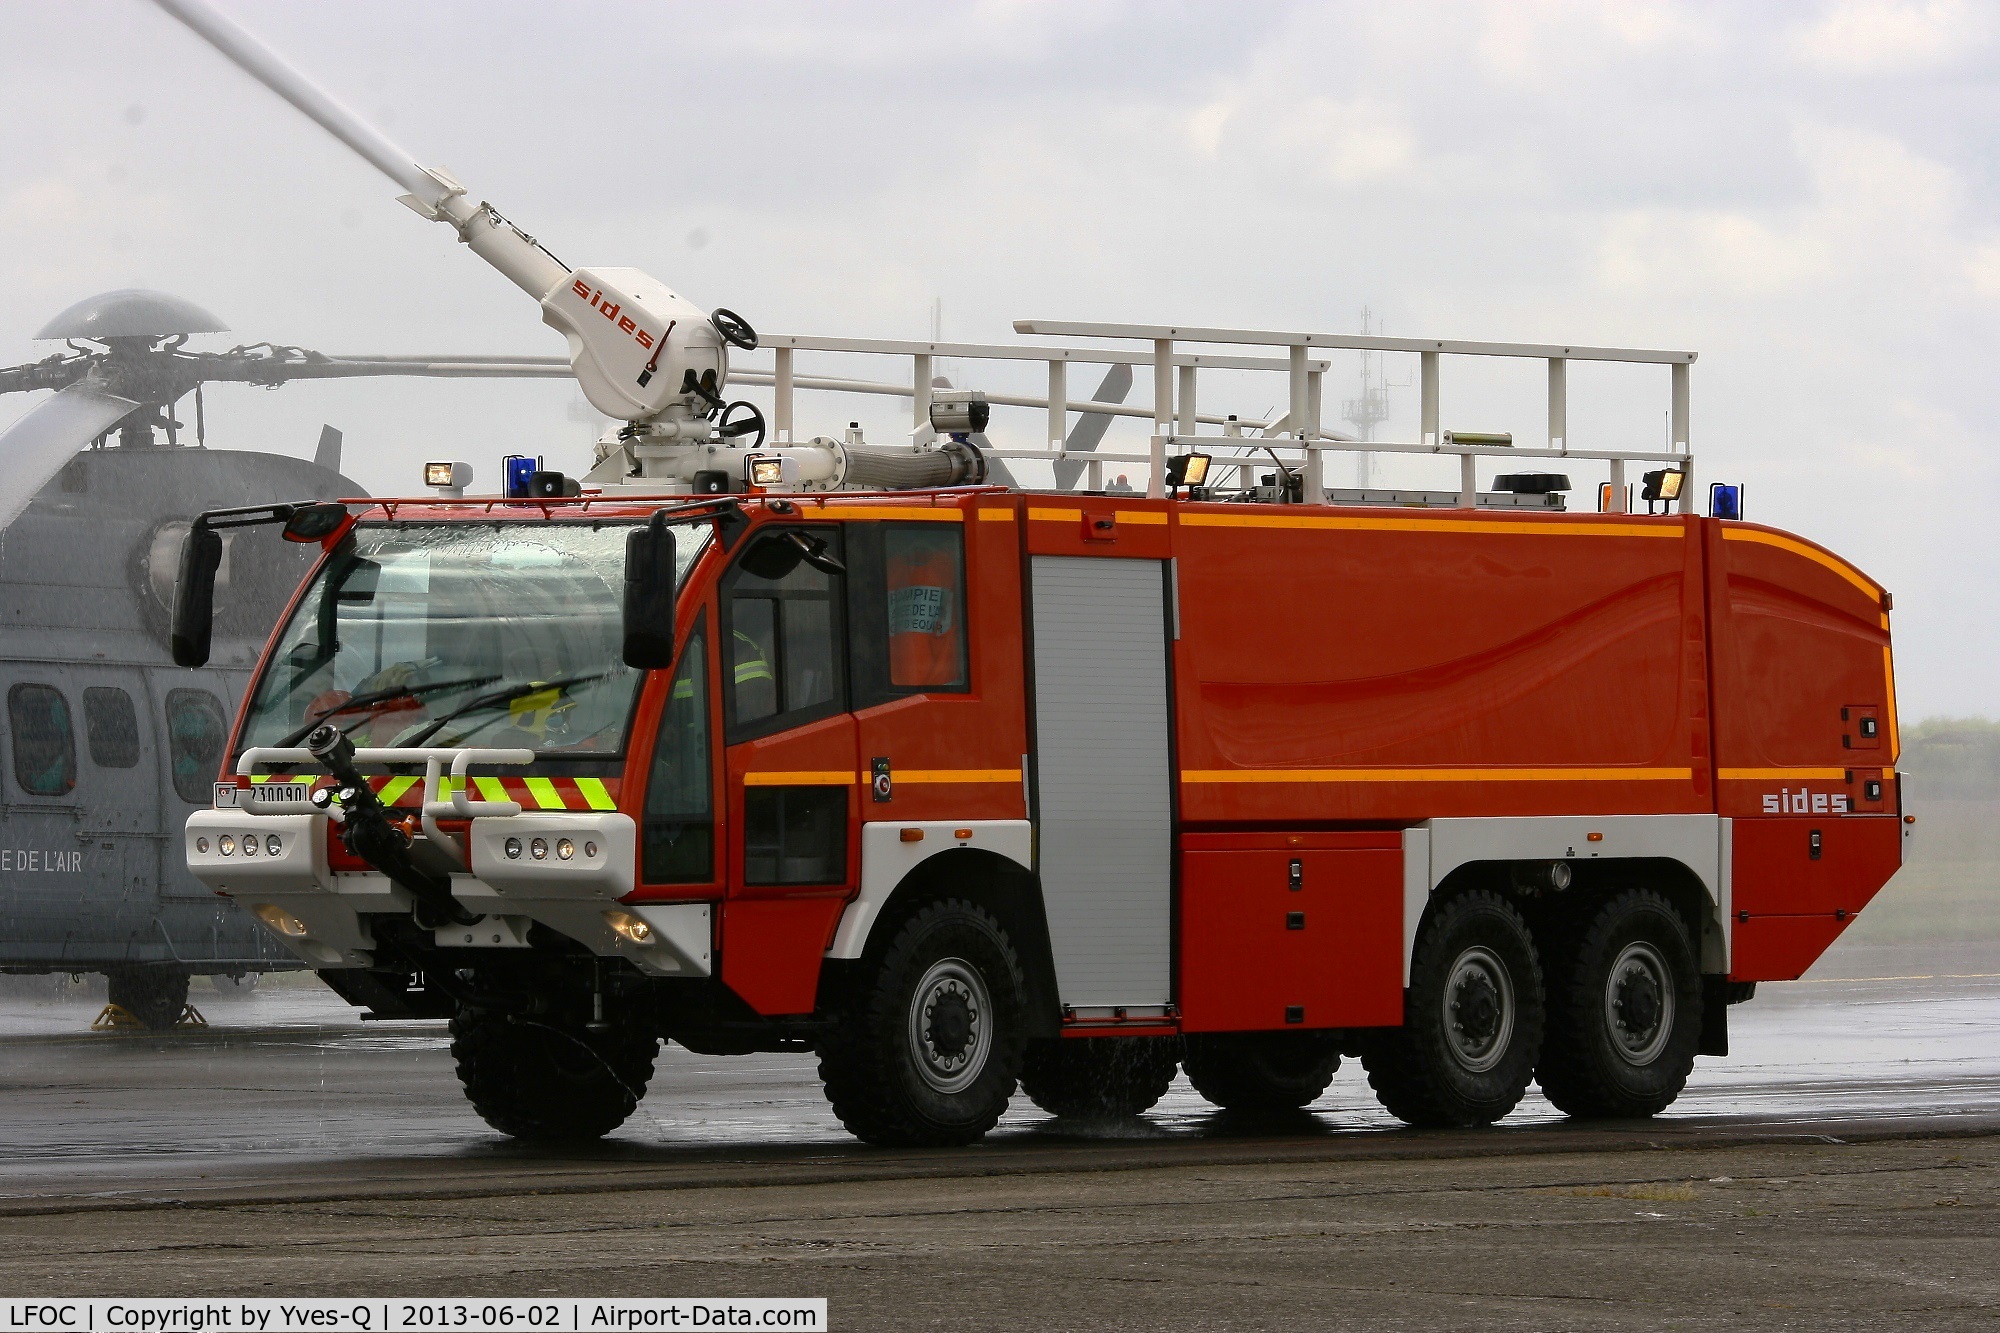 Châteaudun Airport, Châteaudun France (LFOC) - Fire Truck display during open day, Châteaudun Air Base 279 (LFOC)